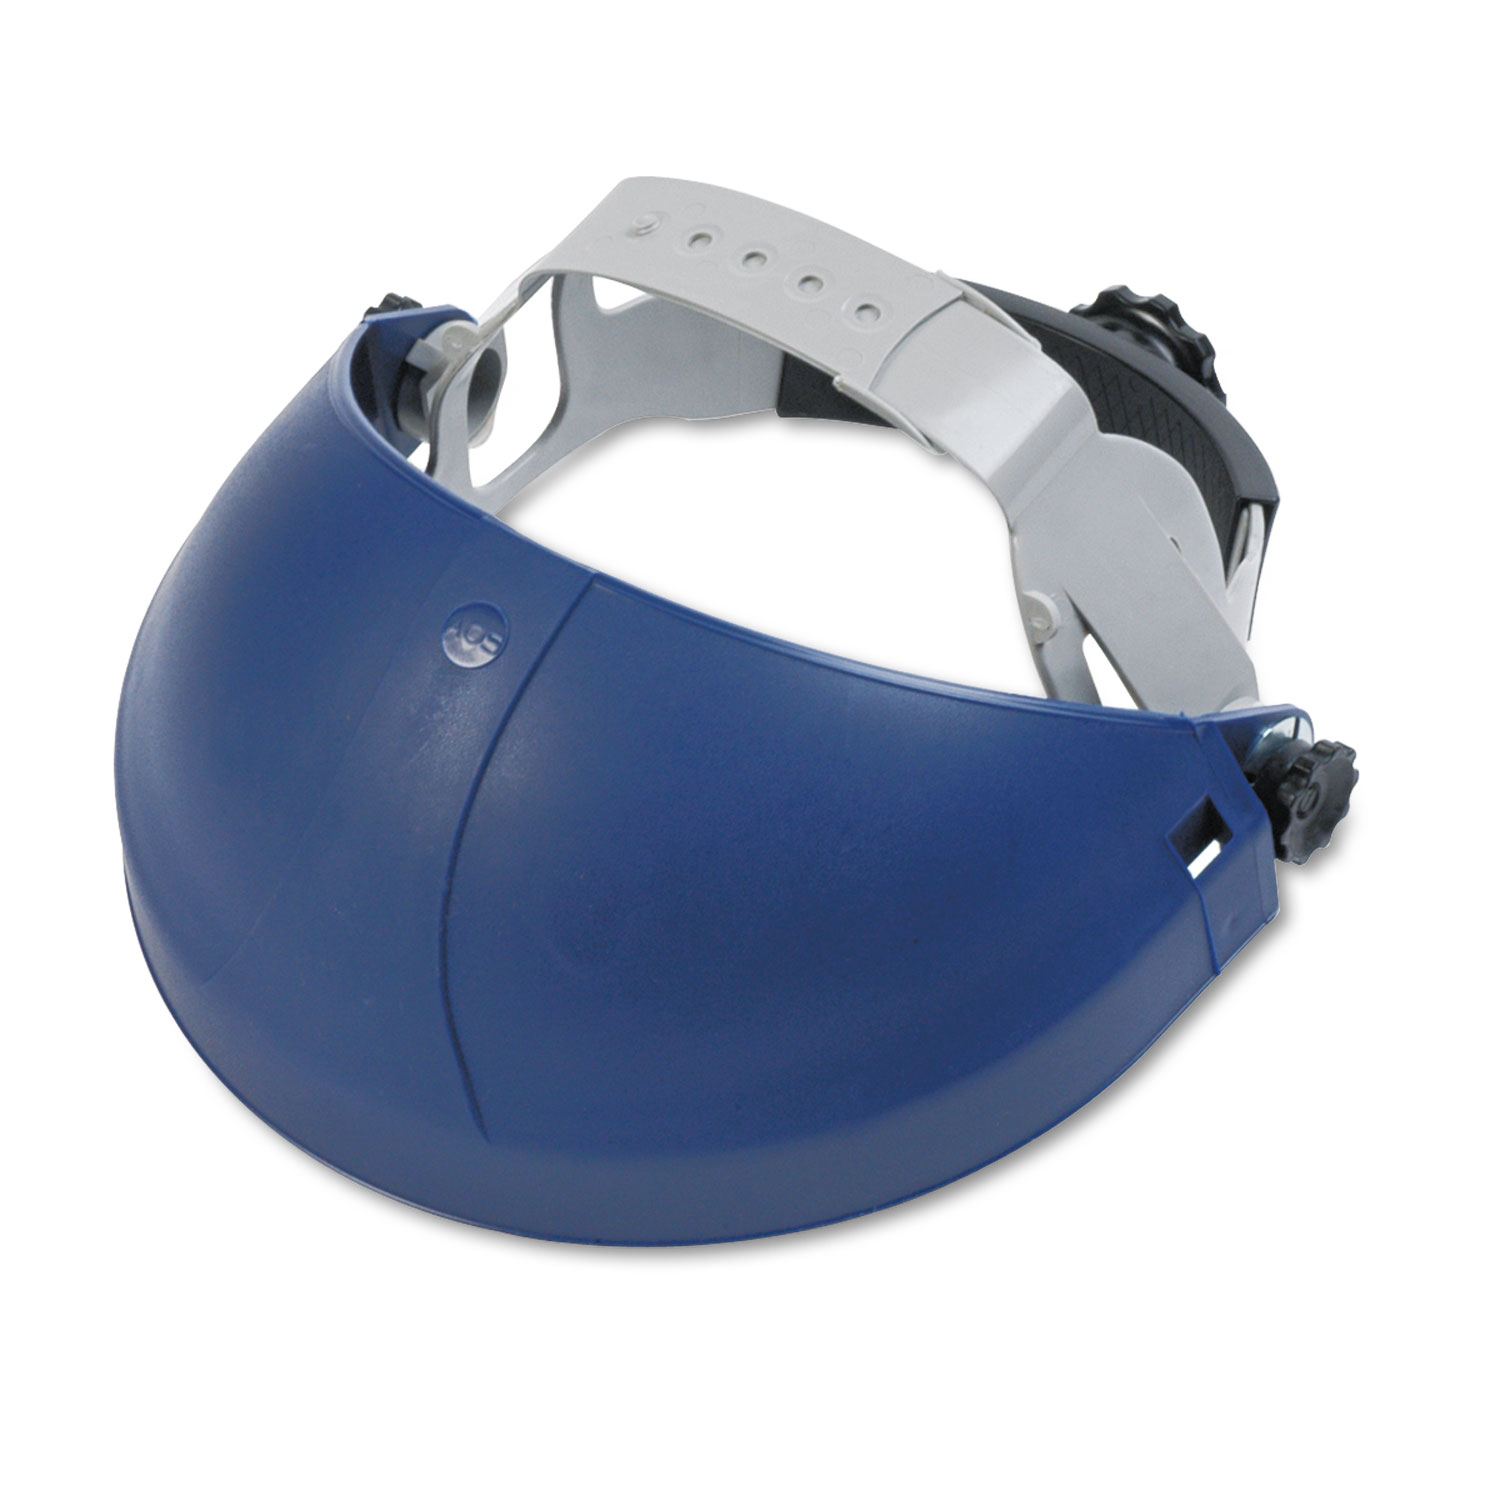  3M 82501-00000 Tuffmaster Deluxe Headgear w/Ratchet Adjustment, Blue (MMM8250100000) 